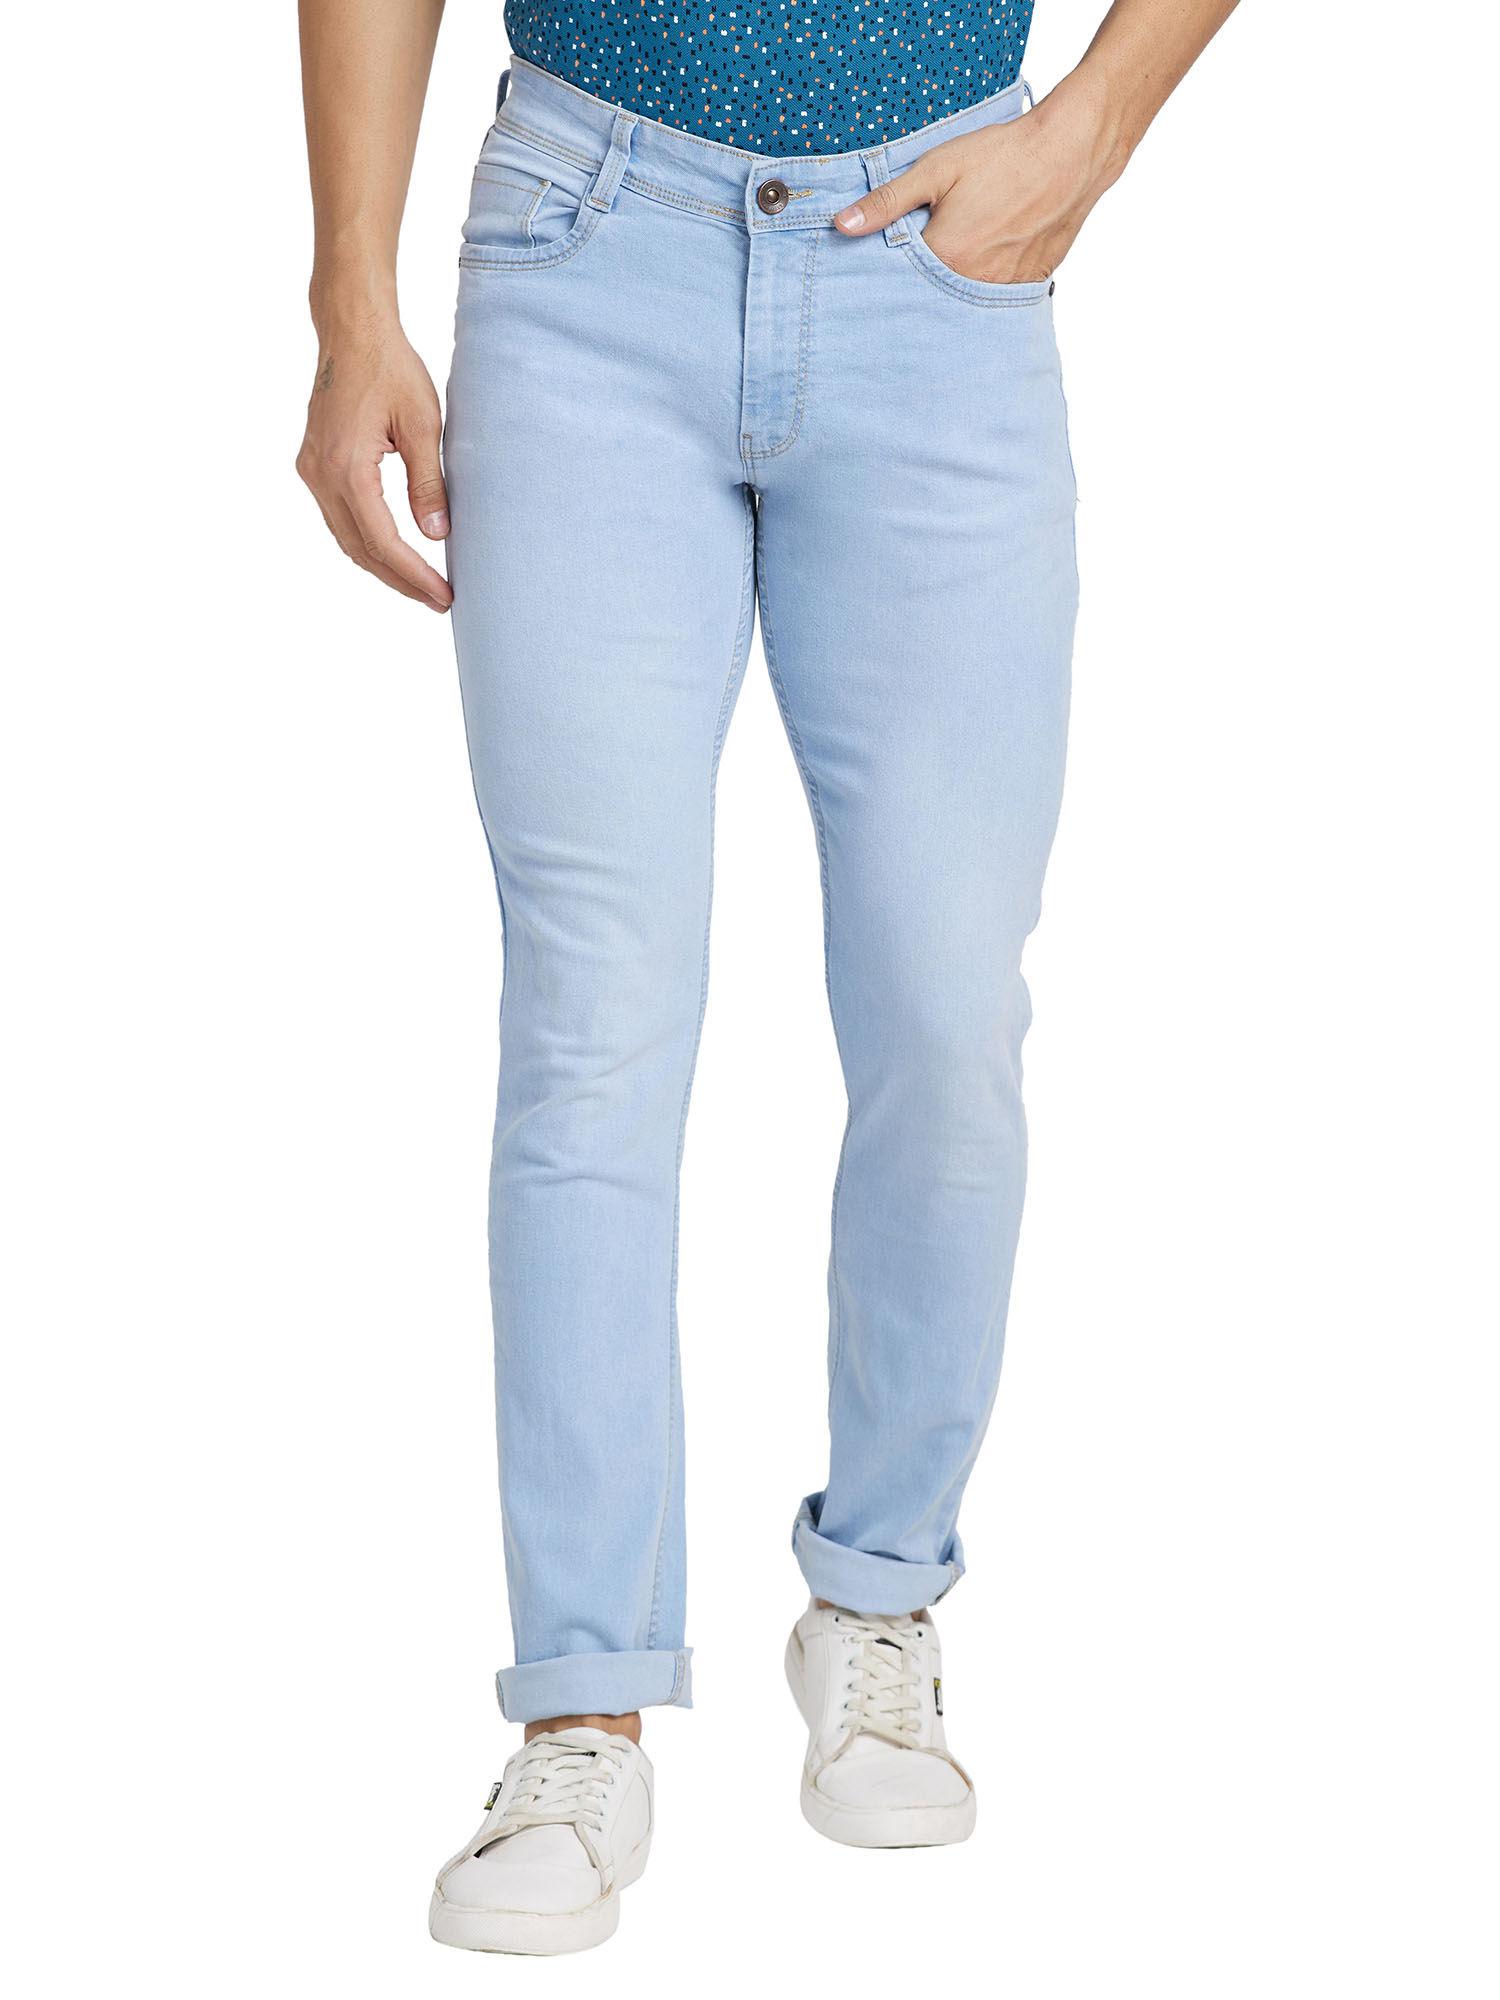 medium blue jeans